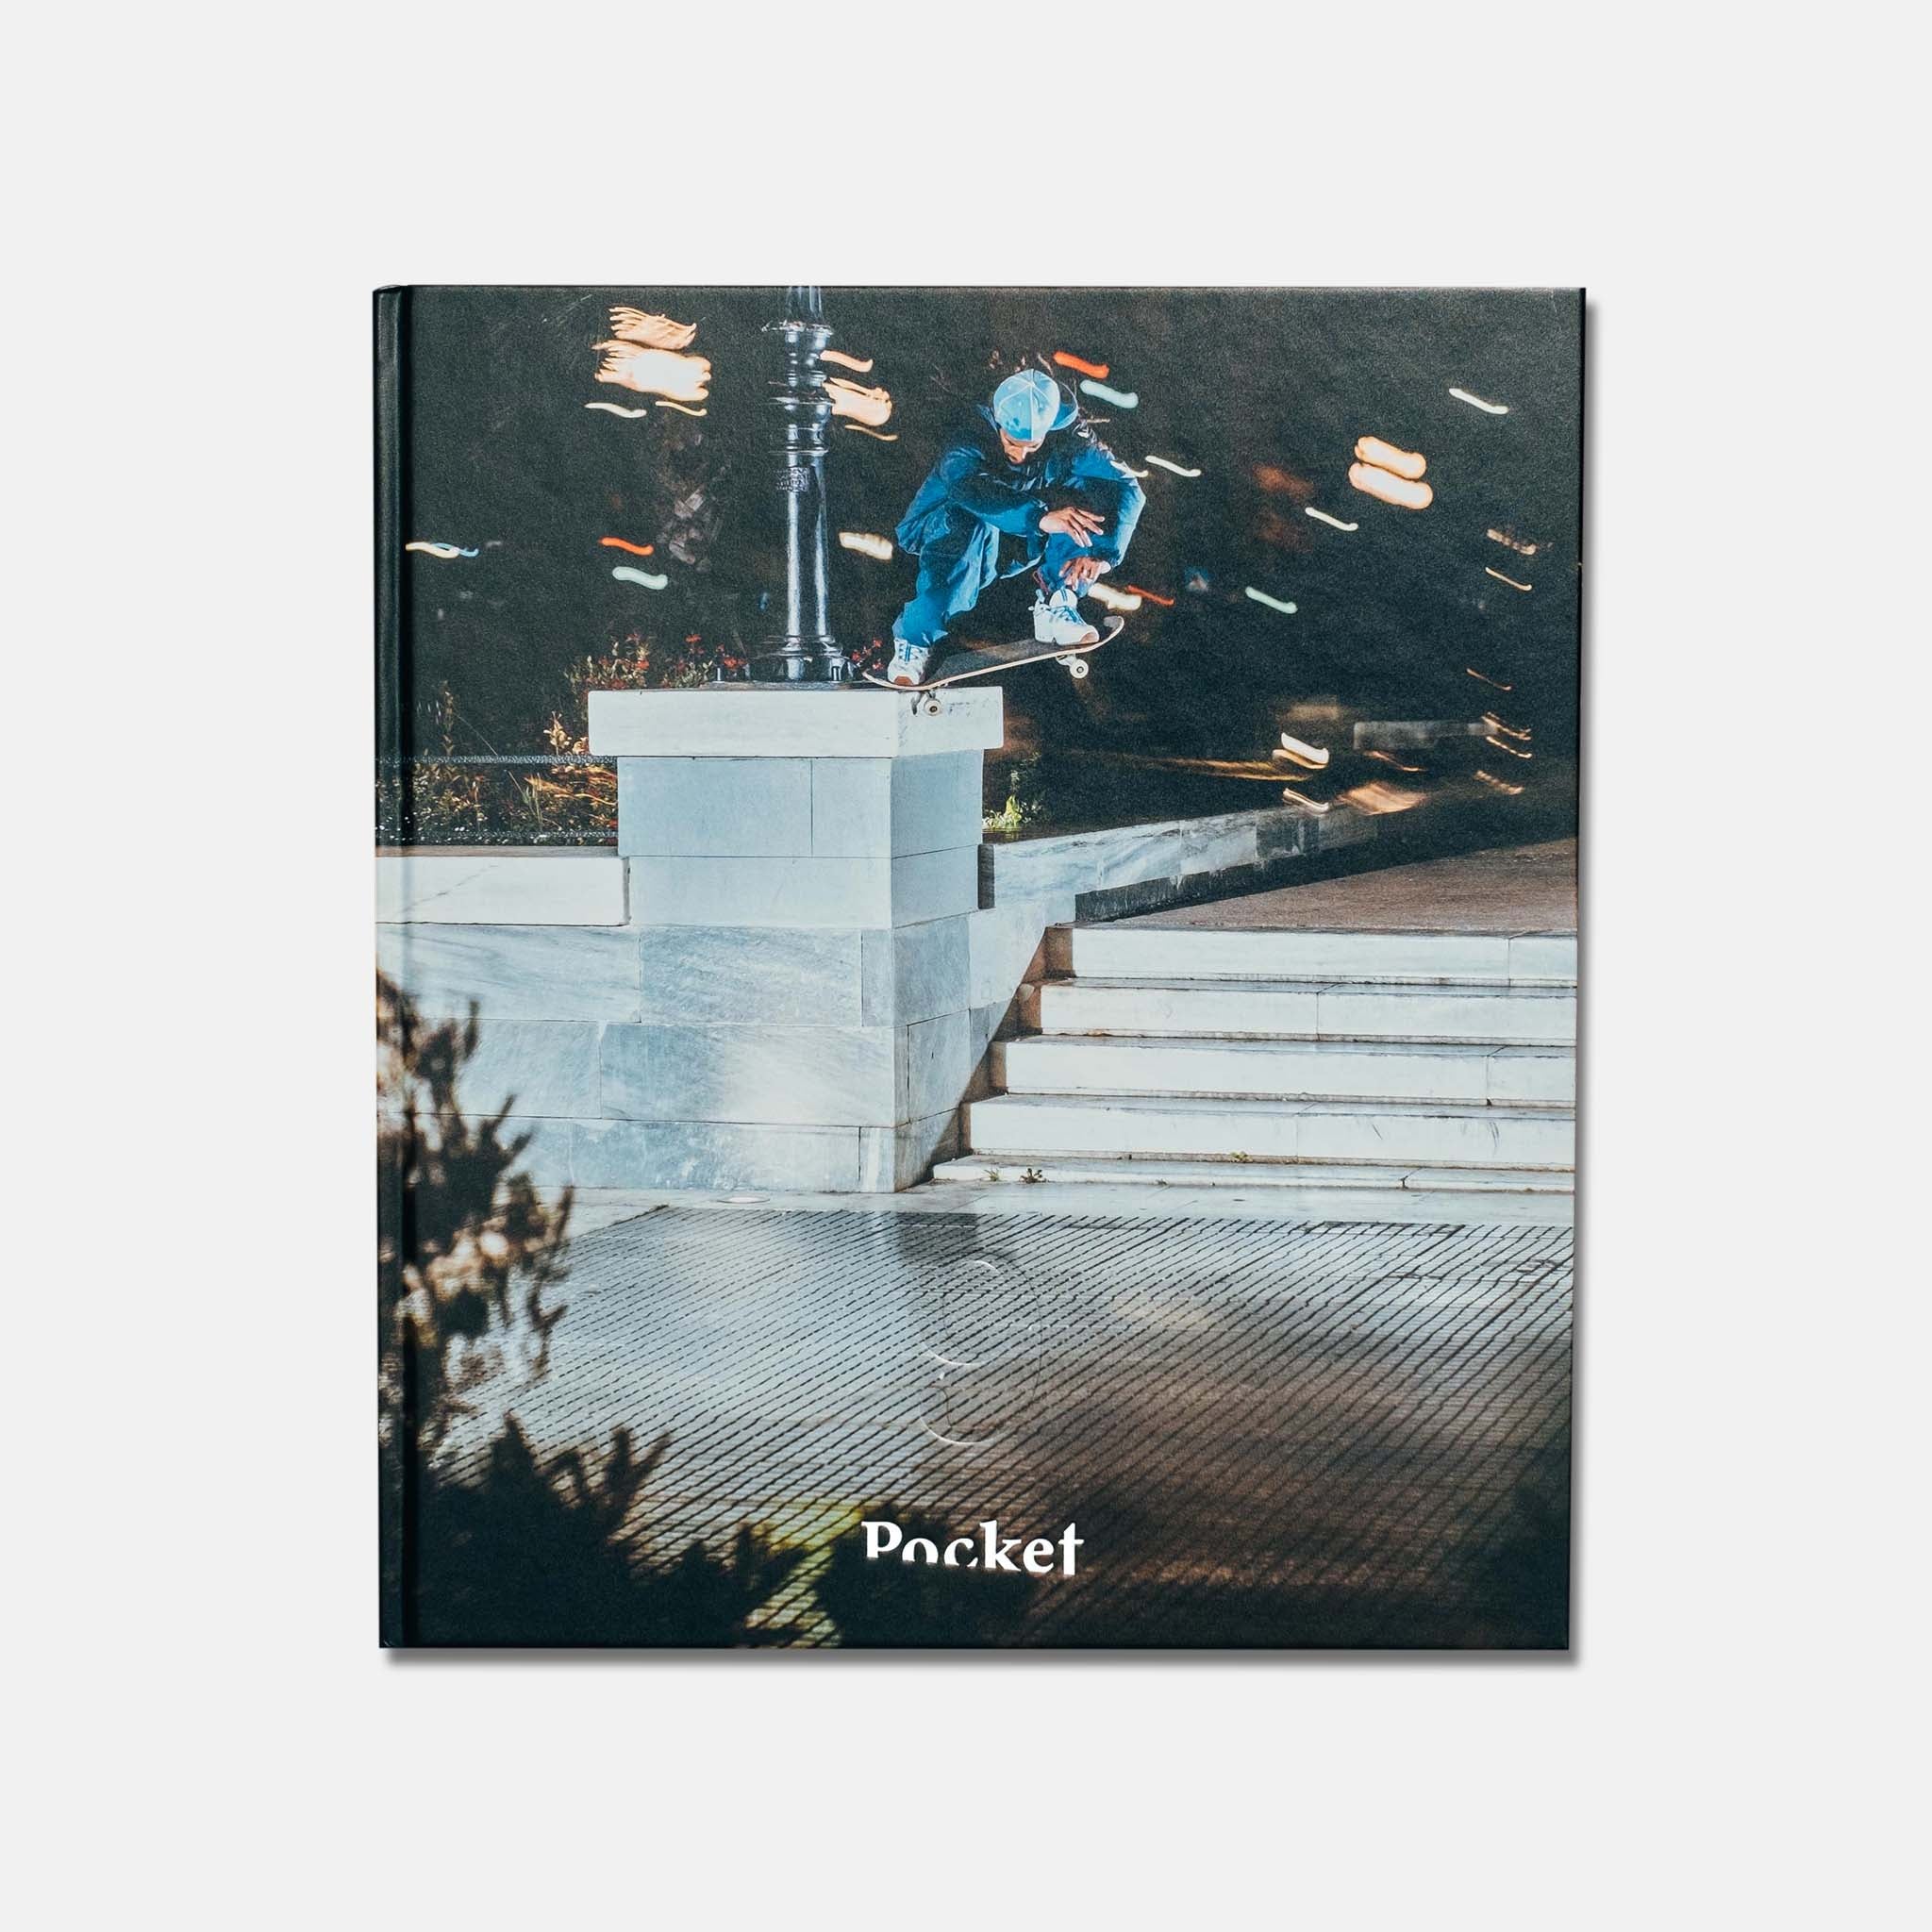 SUPREME – “PLAY DEAD” – Pocket Skateboard Magazine